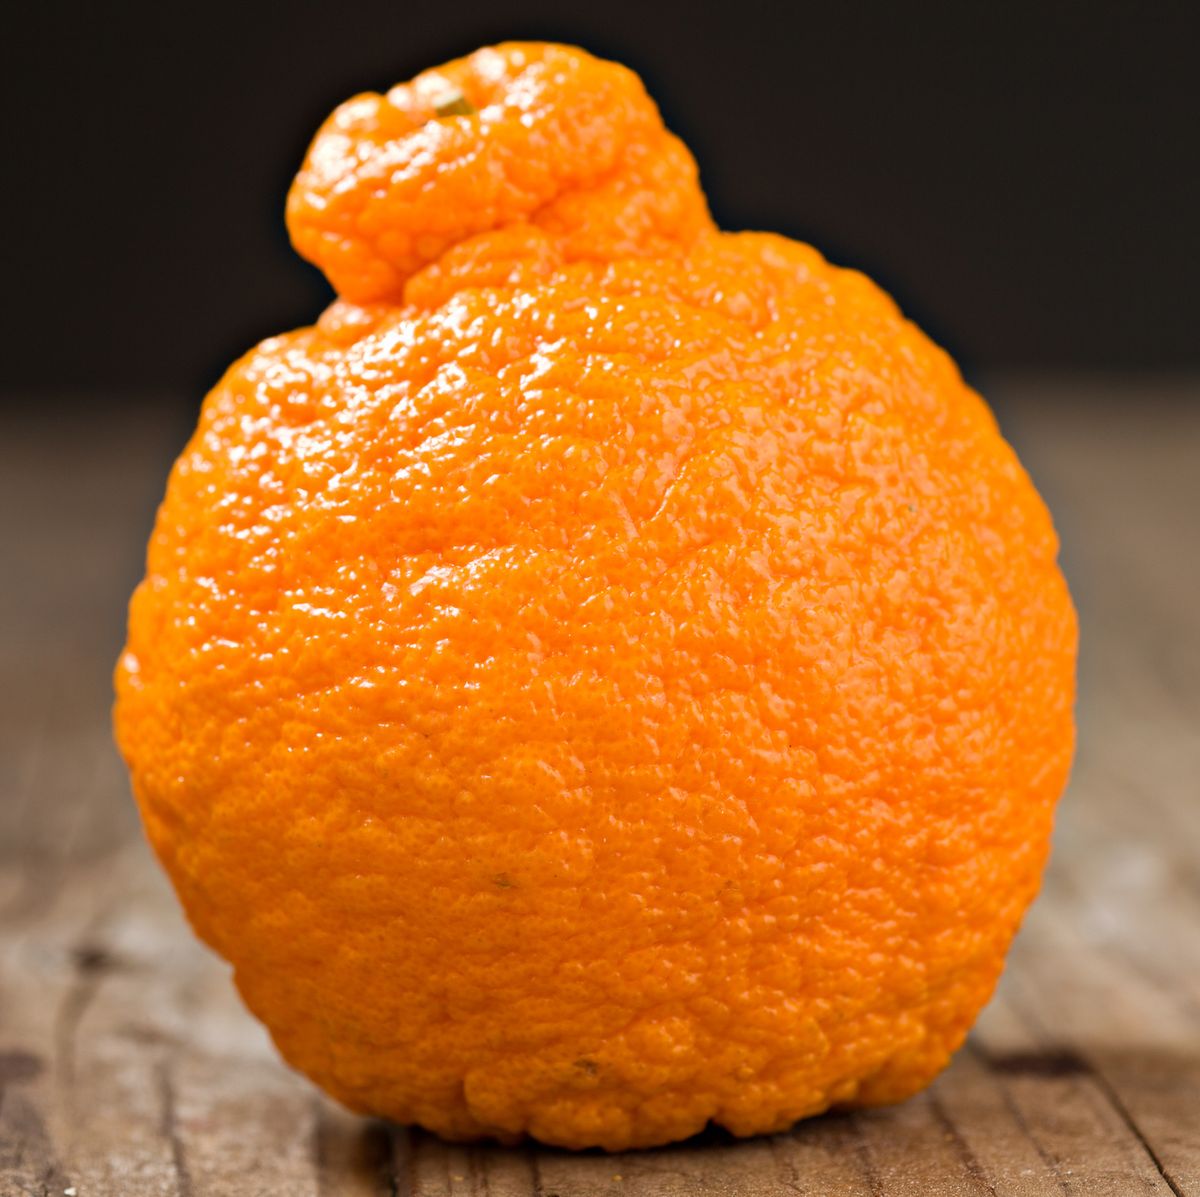 The Reason Sumo Citrus Oranges Are So Expensive